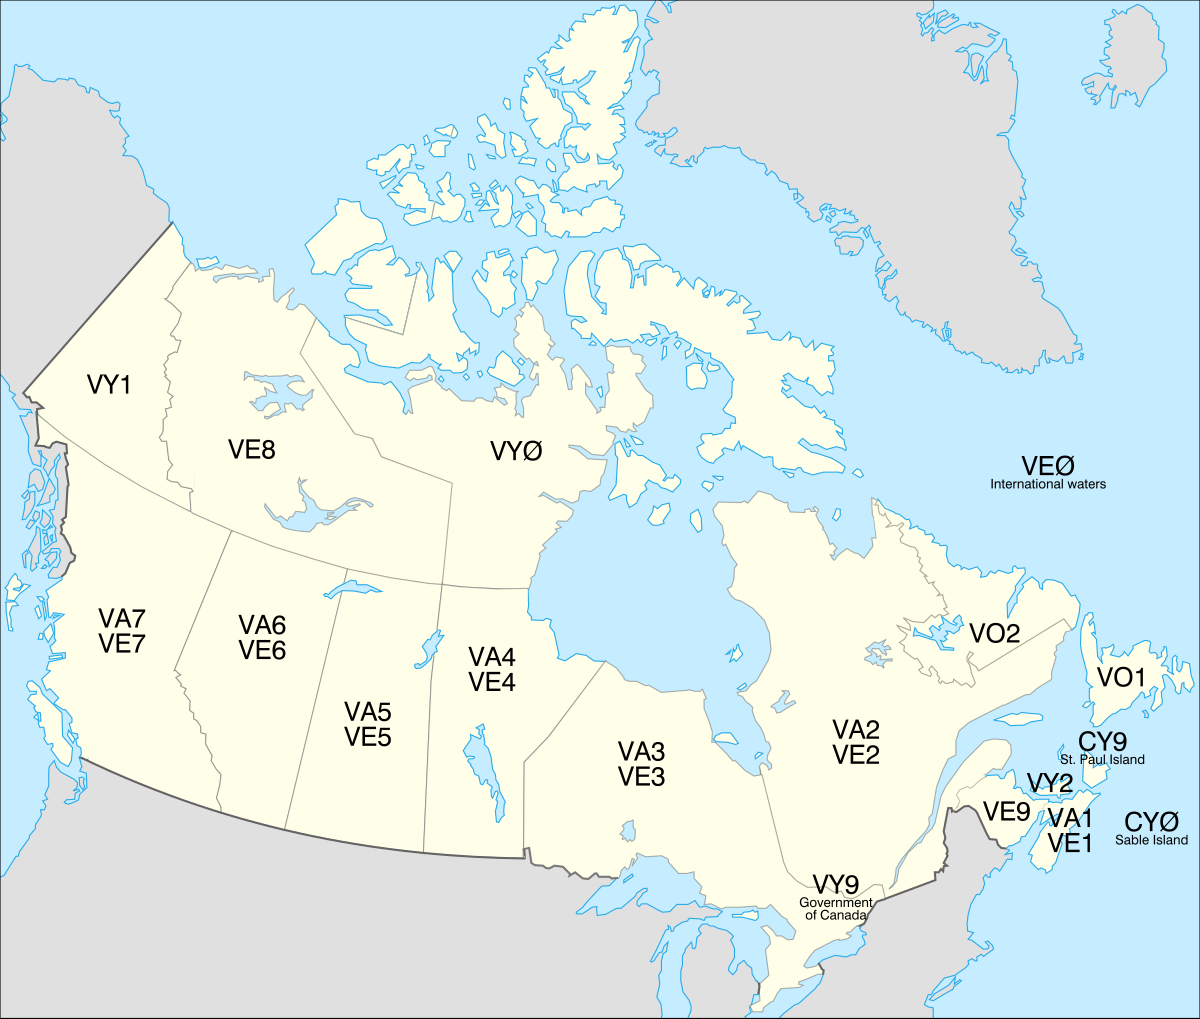 FileAmateur radio prefixes in Canada.svg